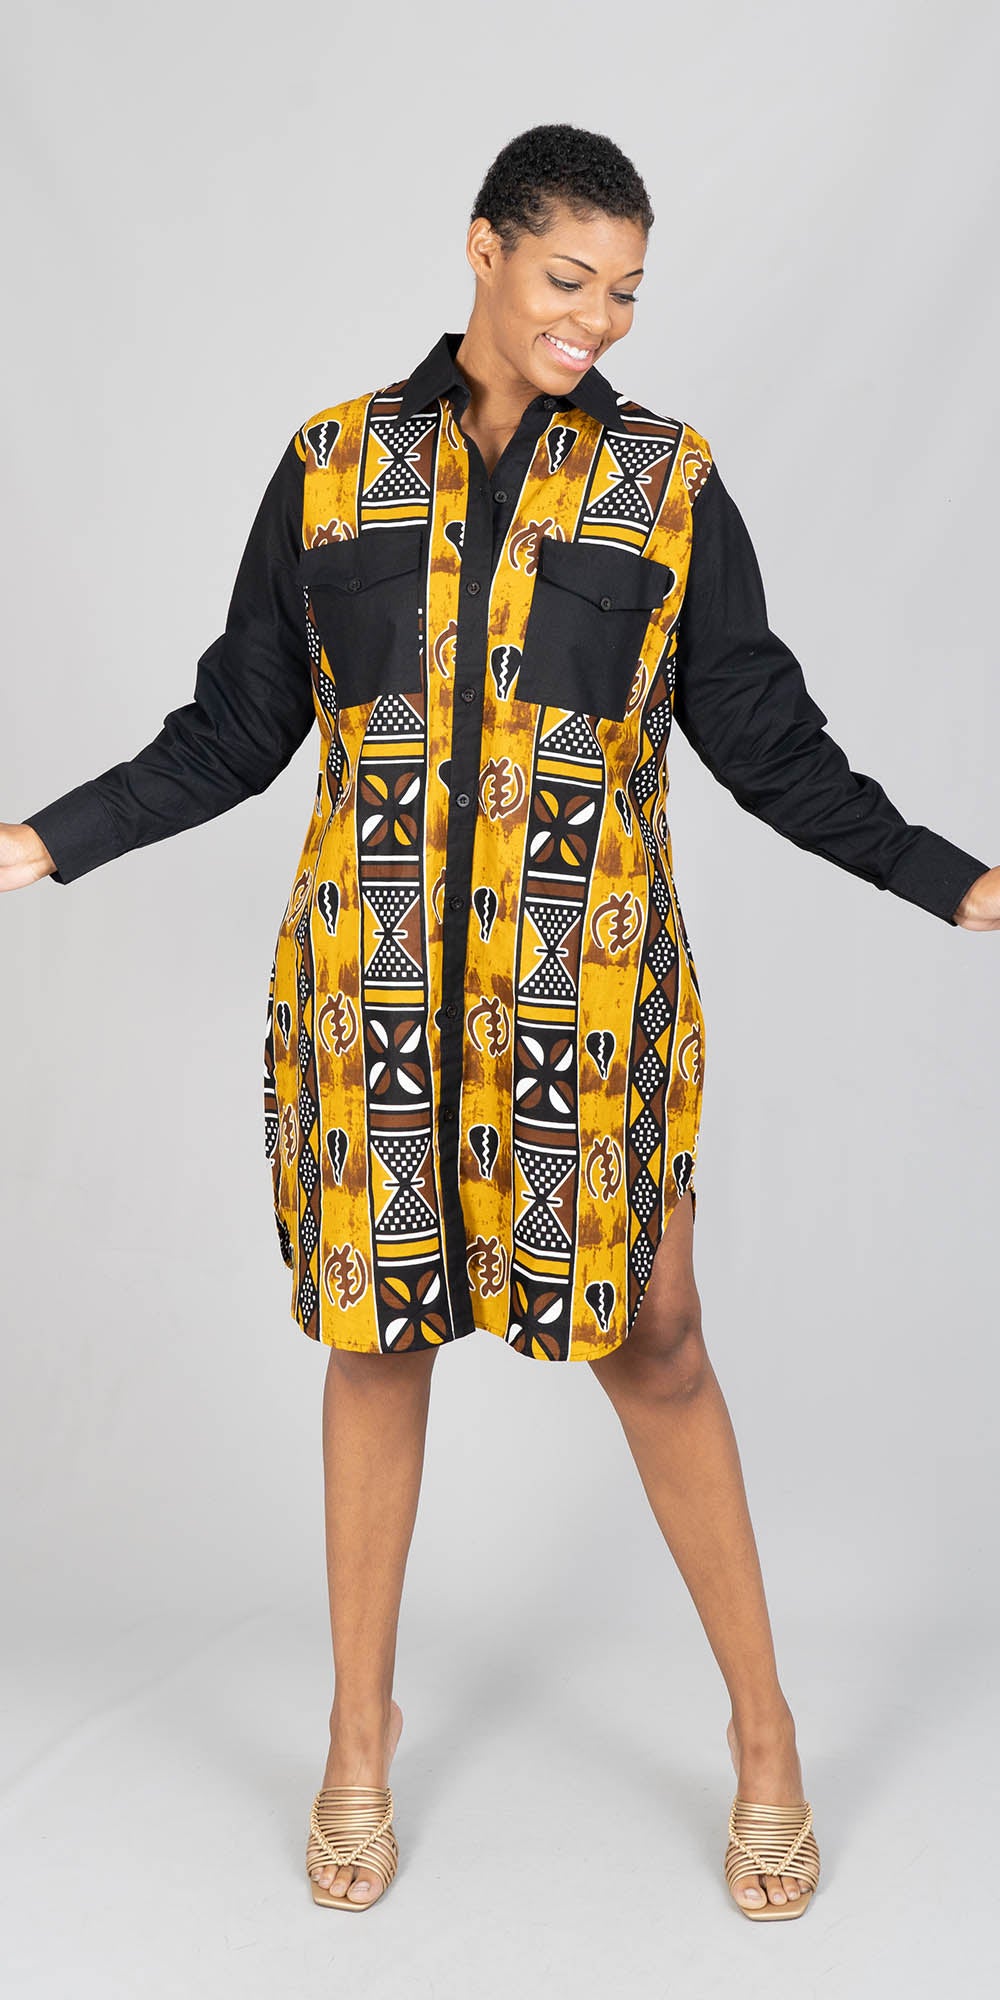 KaraChic 7755A-587 - Long Sleeve African Print and Solid Dress